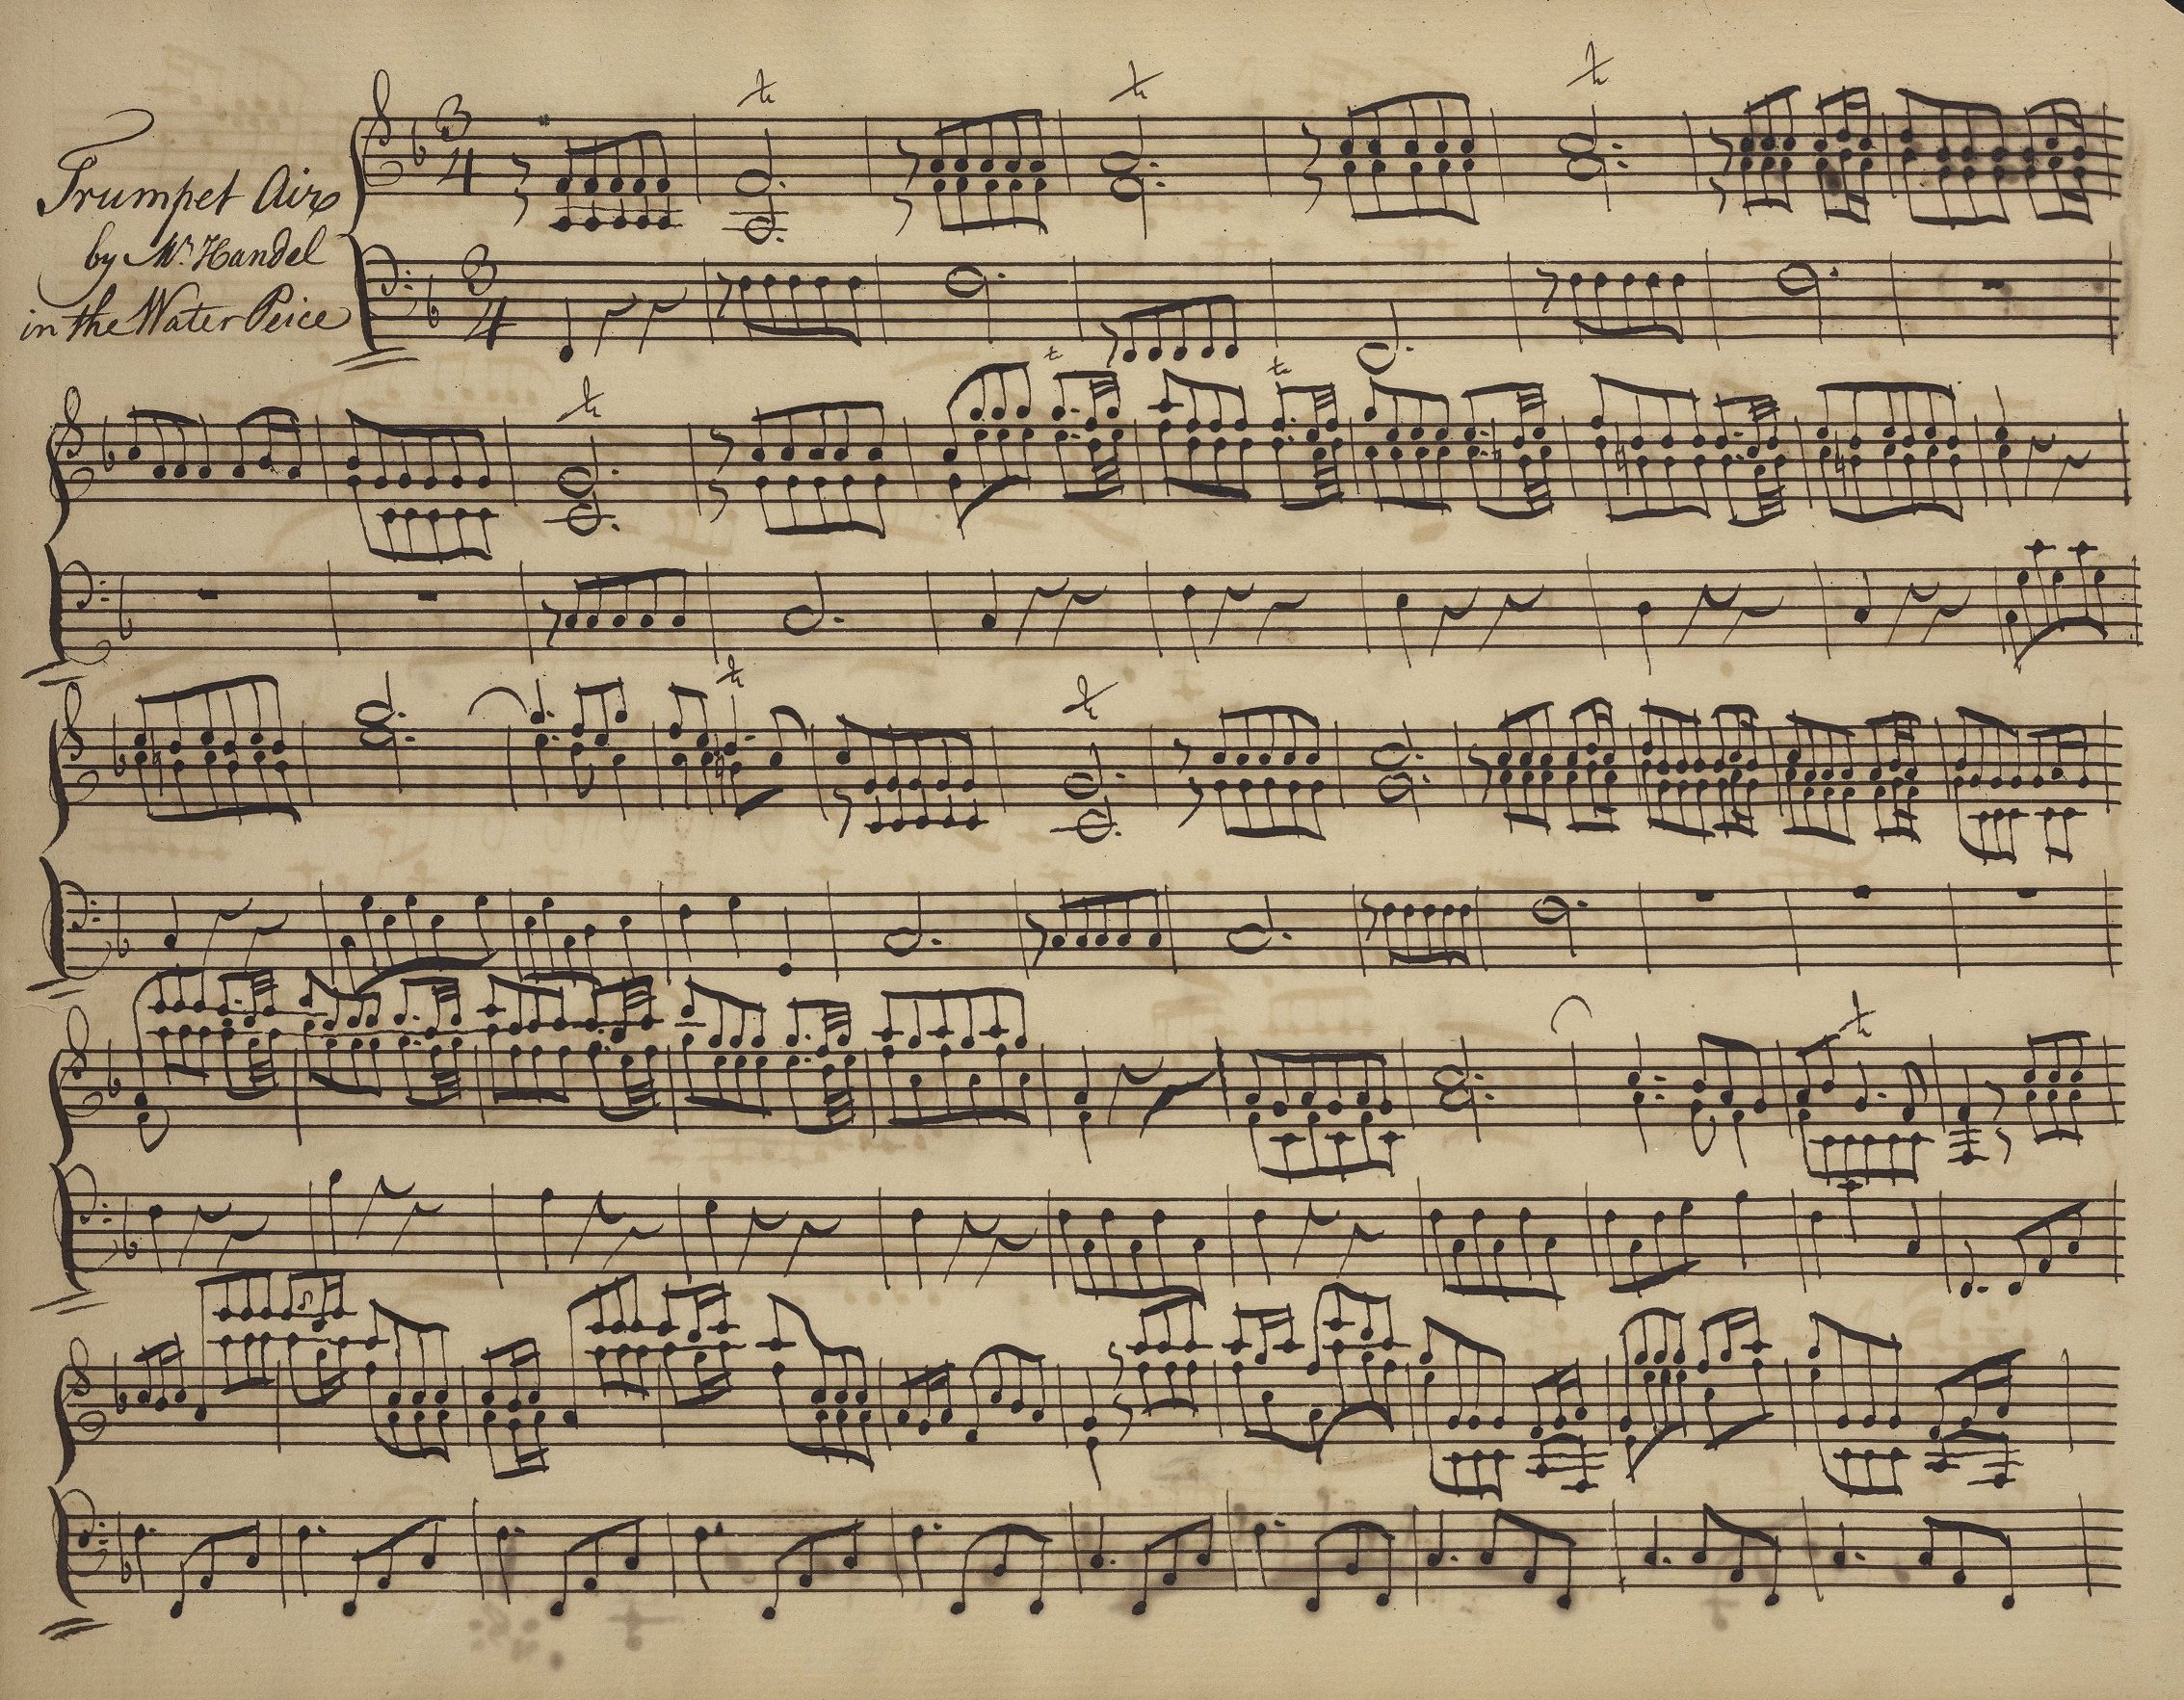 Francis Hopkinson, Harpsichord [manuscript] (Philadelphia, ca. 1760), Ms. Codex 14, p. 71